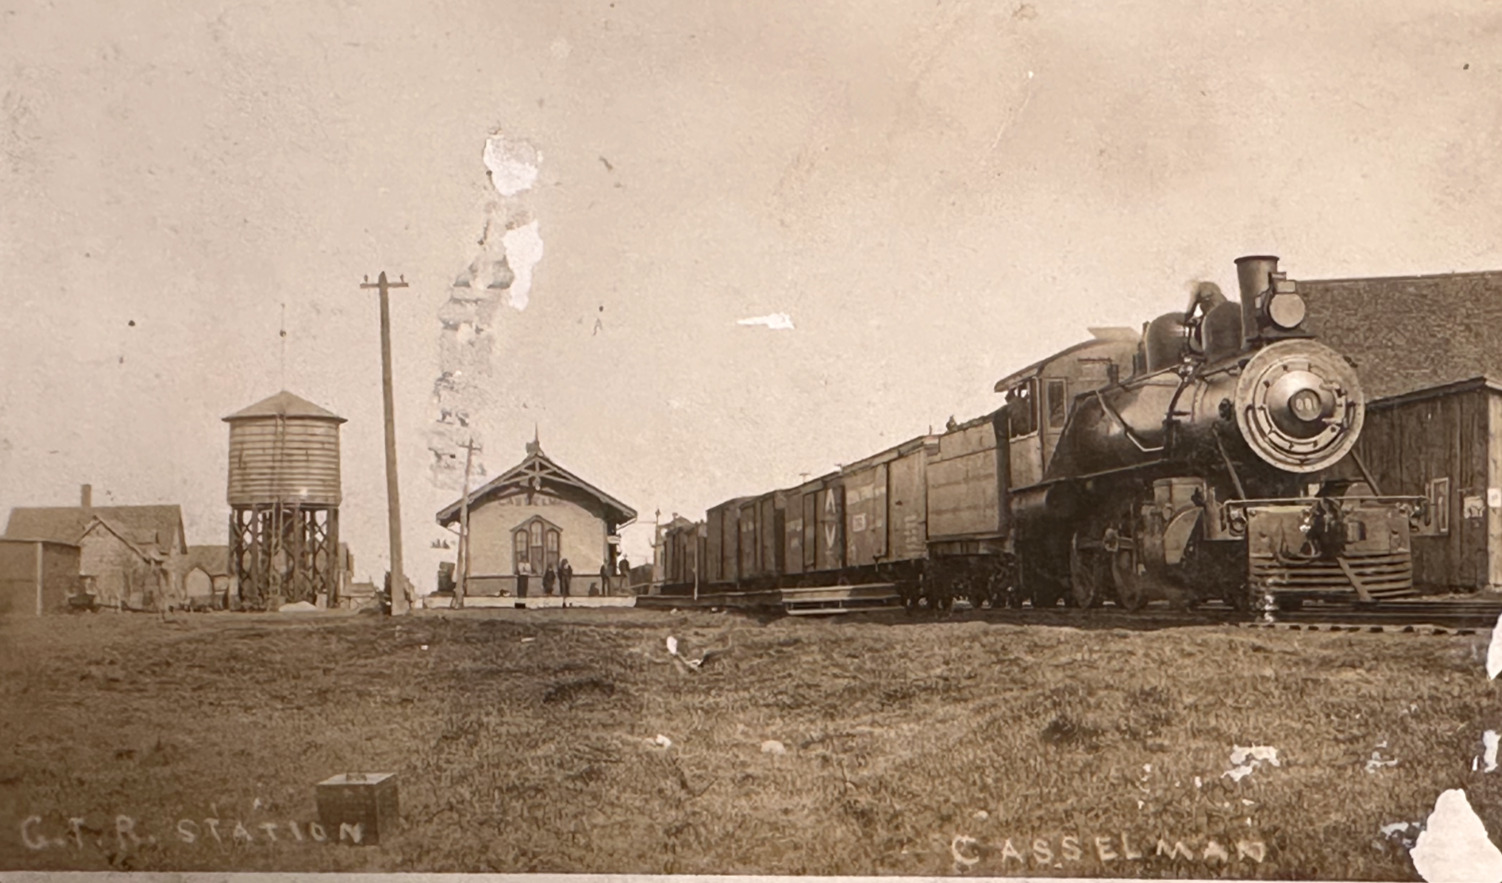 ~1908 GRAND TRUNK RAILWAY CASSELMAN DEPOT ONTARIO CANADA RPPC POSTCARD